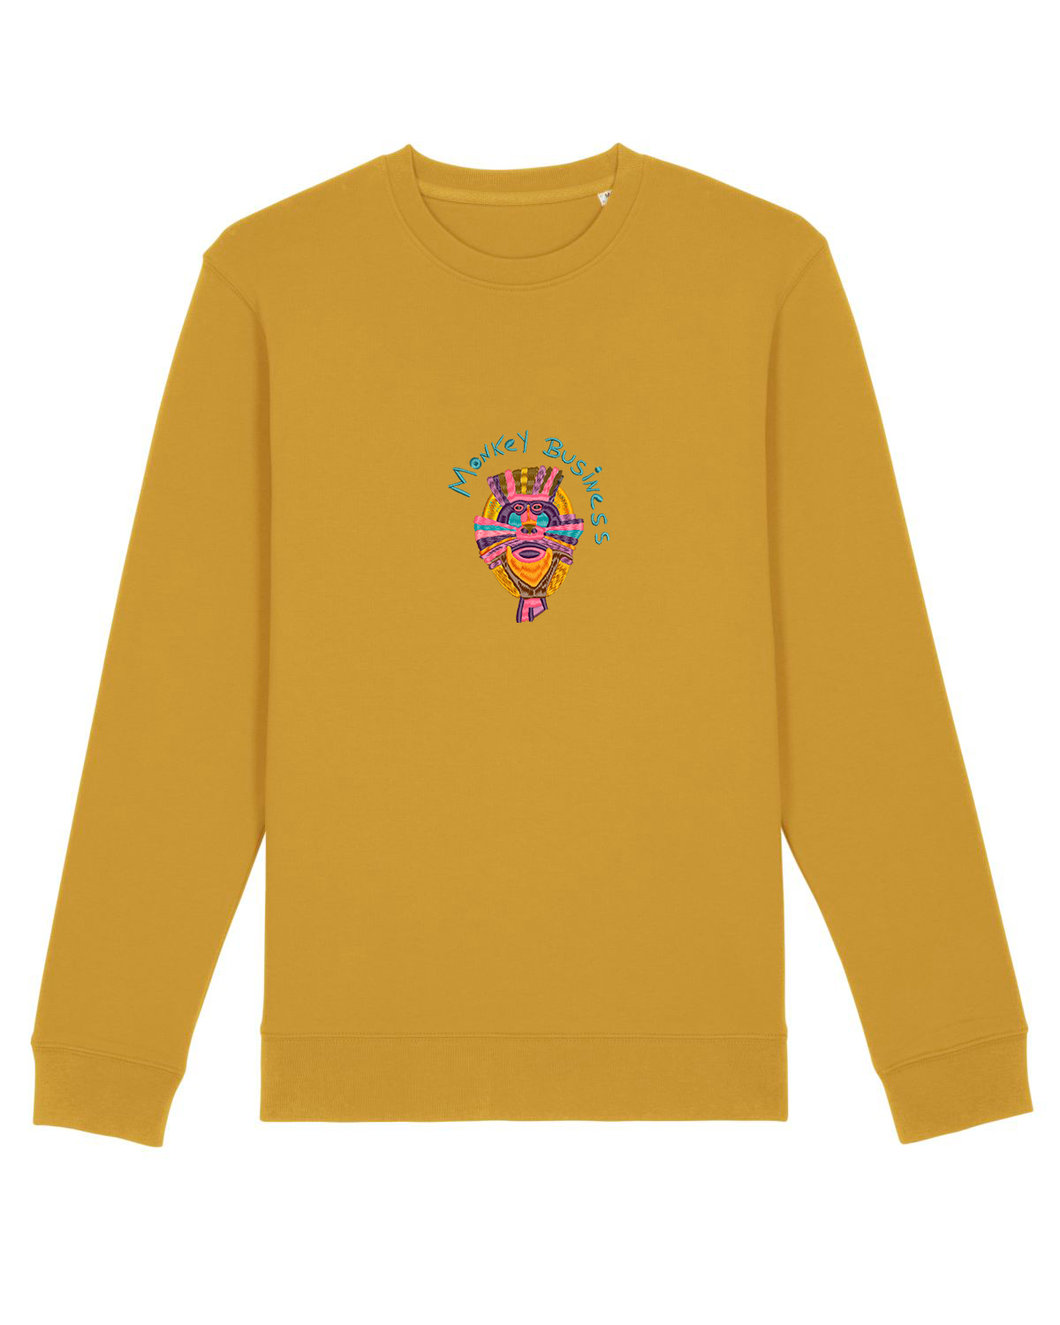 MONKEY BUSINESS 🐵 - Embroidered UNISEX Sweatshirt